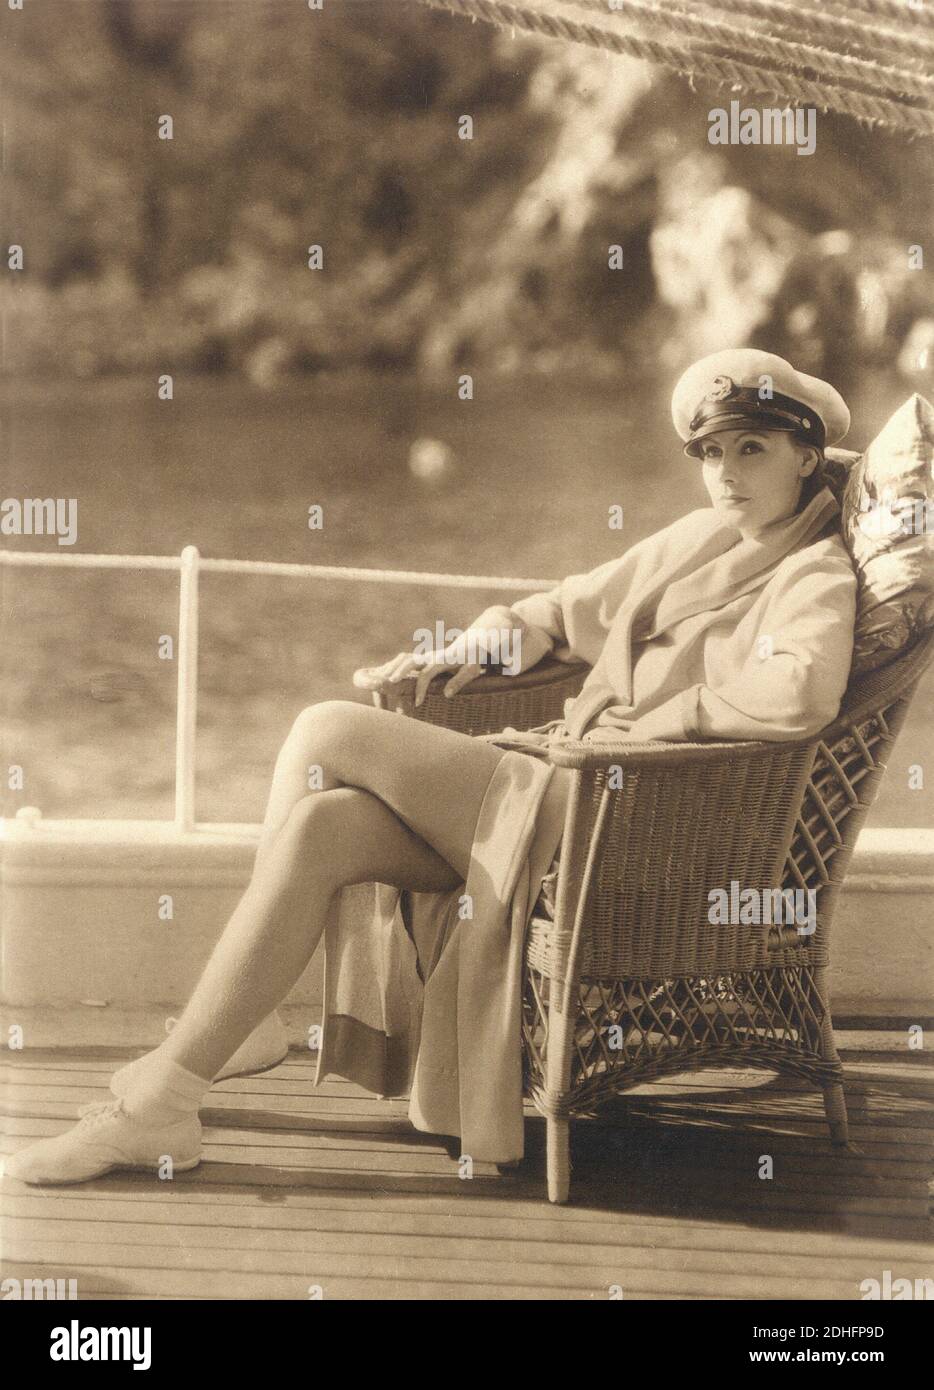 1929 , USA :  GRETA  GARBO at Catalina Island, California ,   in  THE SINGLE STANDARD  (  La  donna che ama  ) by John S. Robertson  , from the romance by Adela Rogers St. Johns  , costume dress by ADRIAN  - MGM - Metro Goldwyn Mayer -  MOVIE - HOLLYWOOD - CINEMA - FILM - actress - attrice  - accappatoio - bath-robe - bathrobe - bath robe - vimini chair - poltrona - cappello da marinaio - navy hat - leggy pose - gambe - yacht - barca - nave - marinaio - sailor - scarpe da tennis ginnastica - white dress - abito vestito bianco casual     ----   Archivio GBB Stock Photo